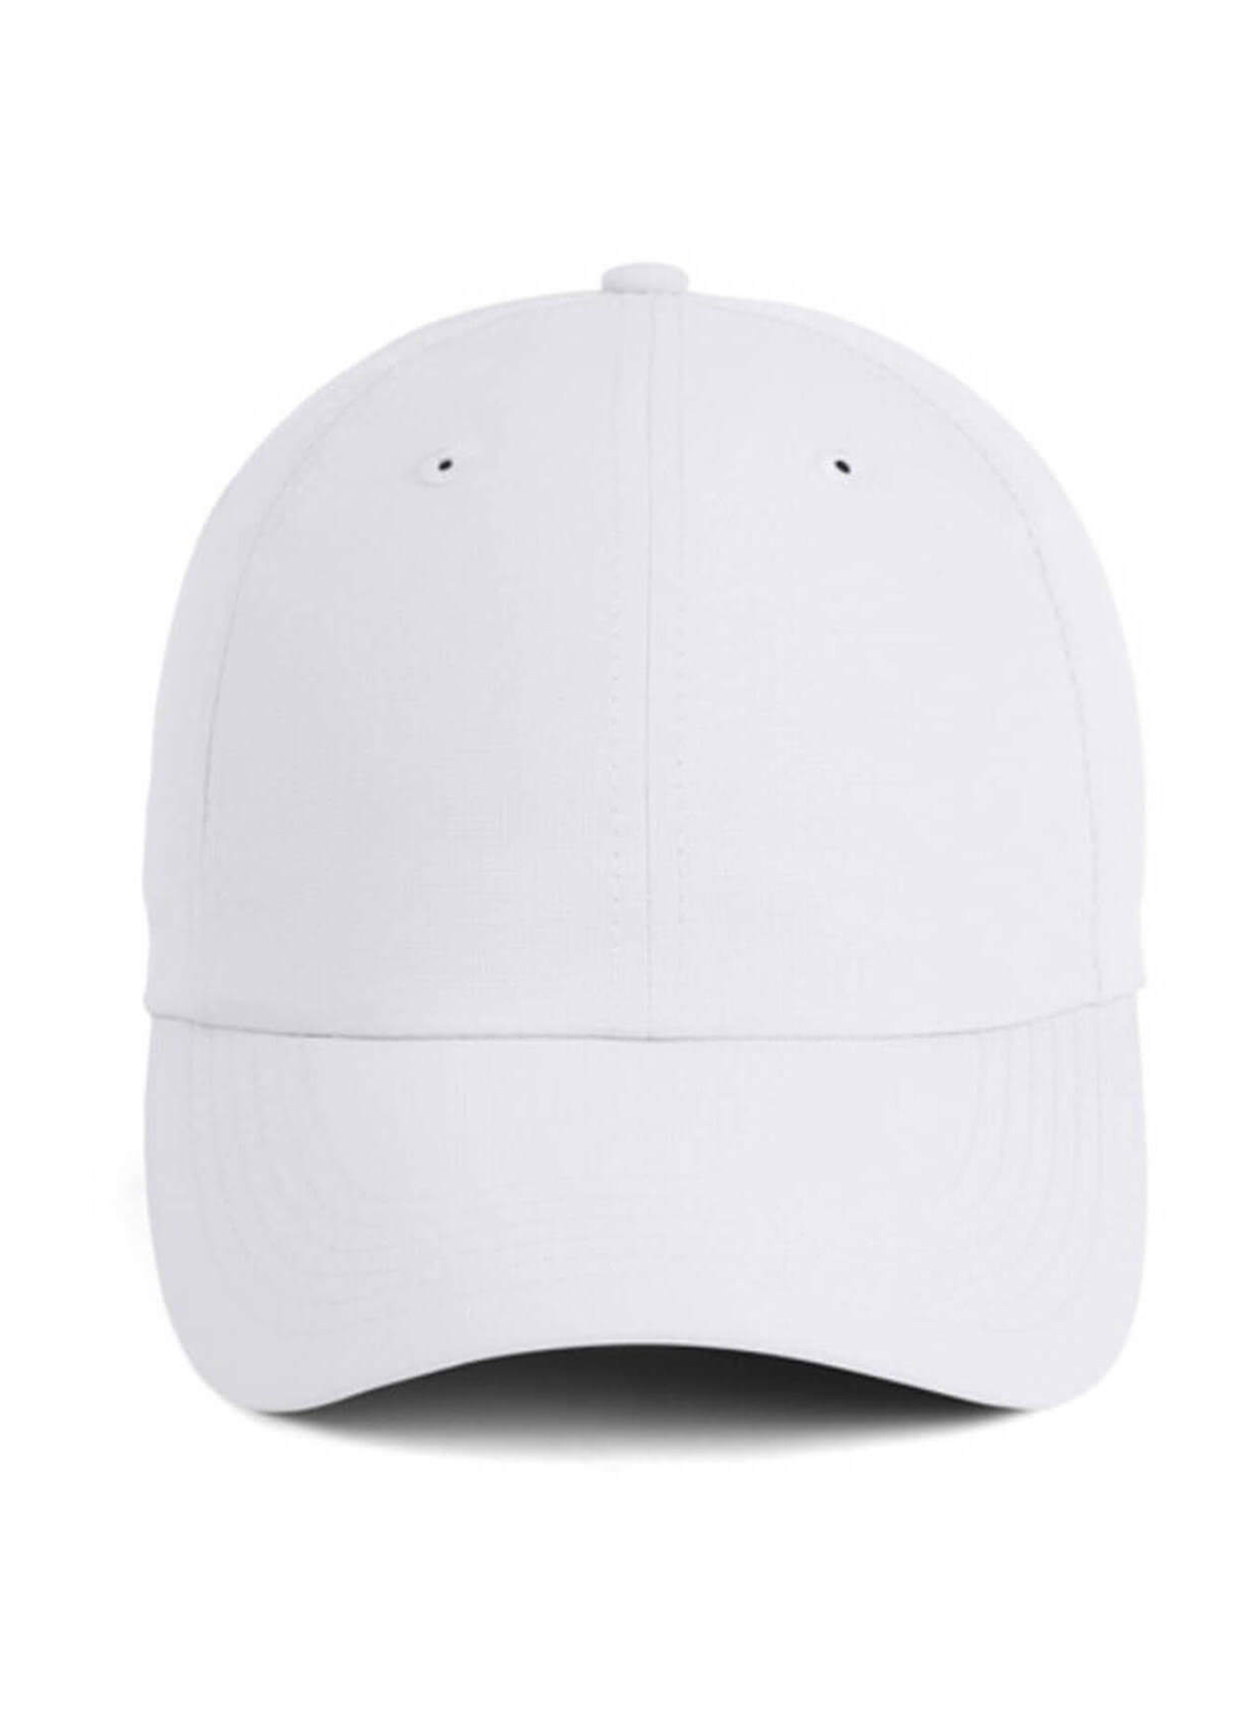 Imperial White Original Performance Hat